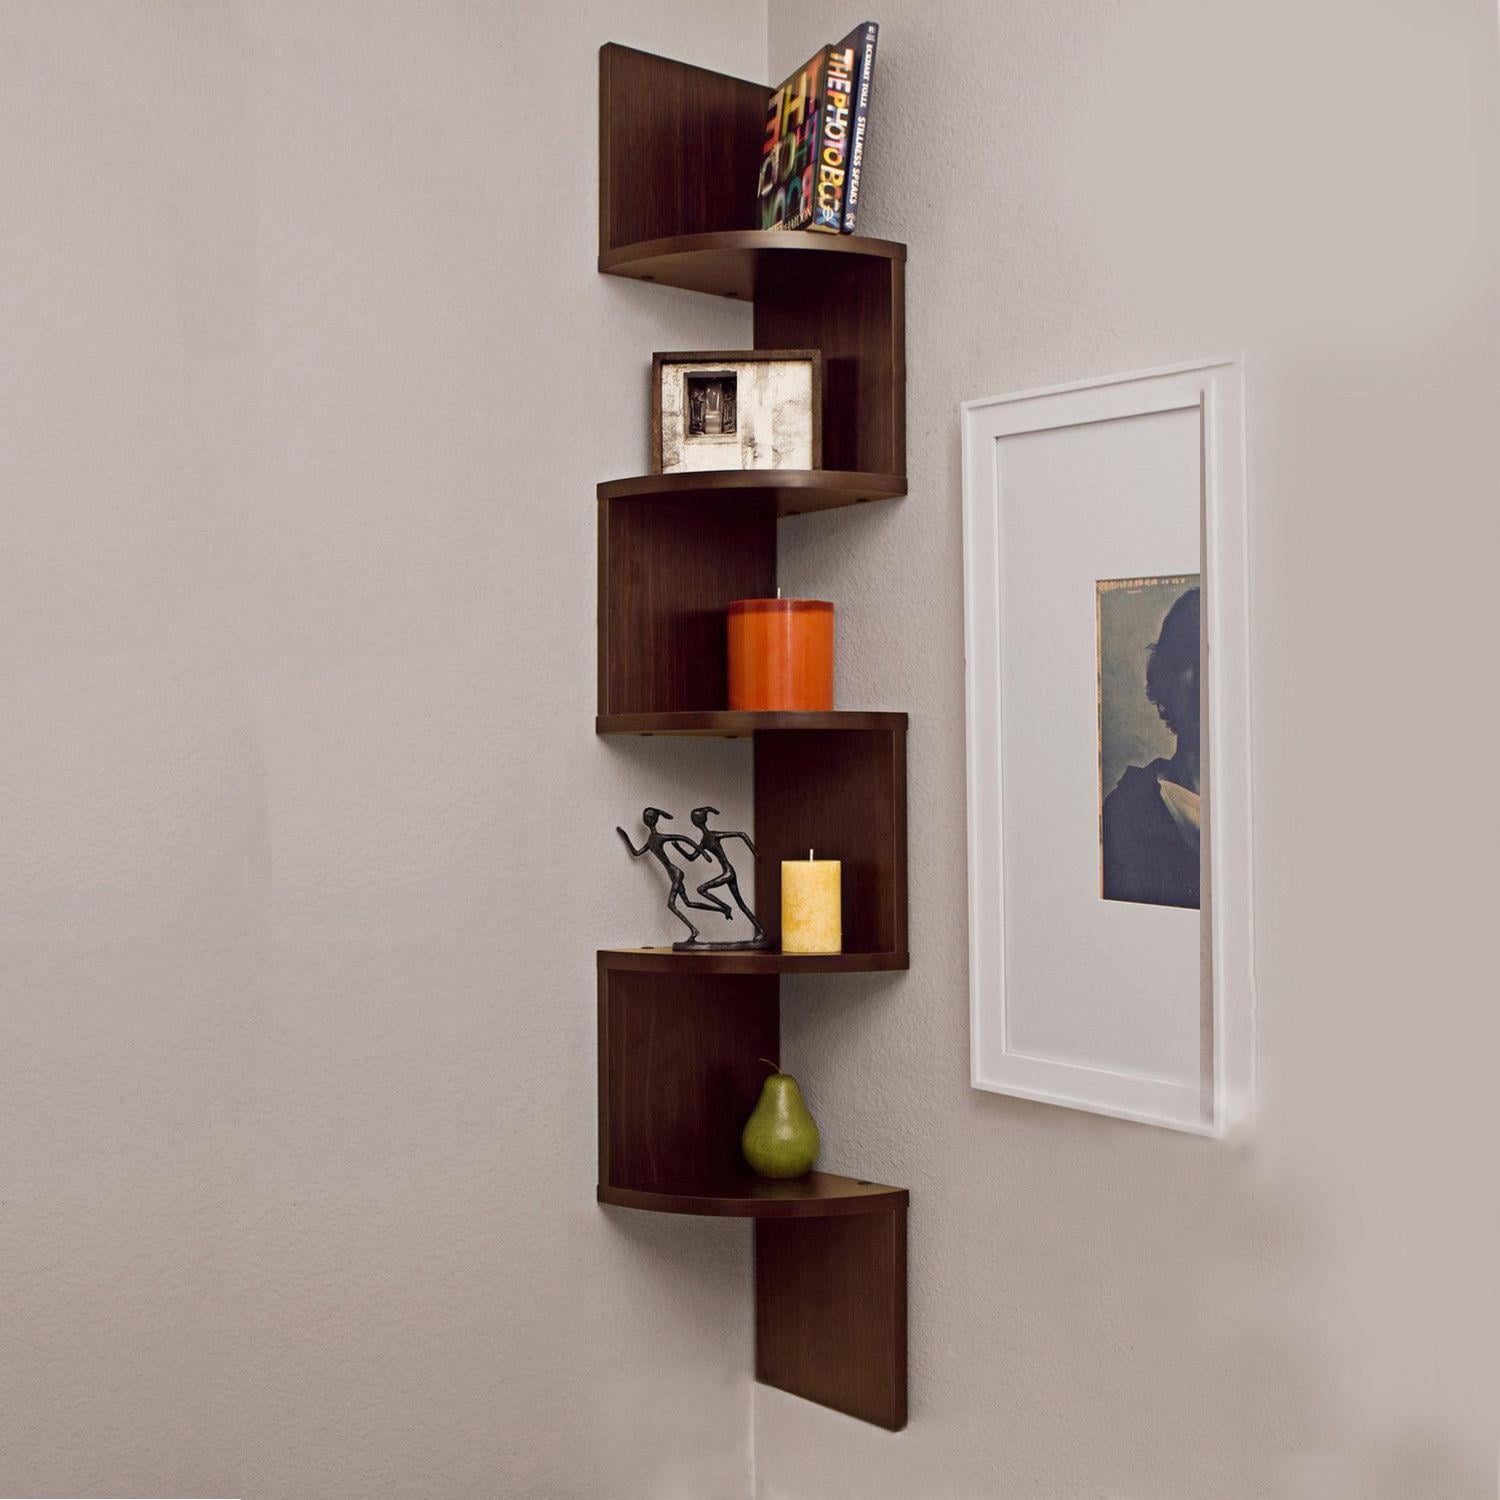 Floating Corner Shelf Wall Mounted  Wood Storage Shelf Home Office Decor Display 